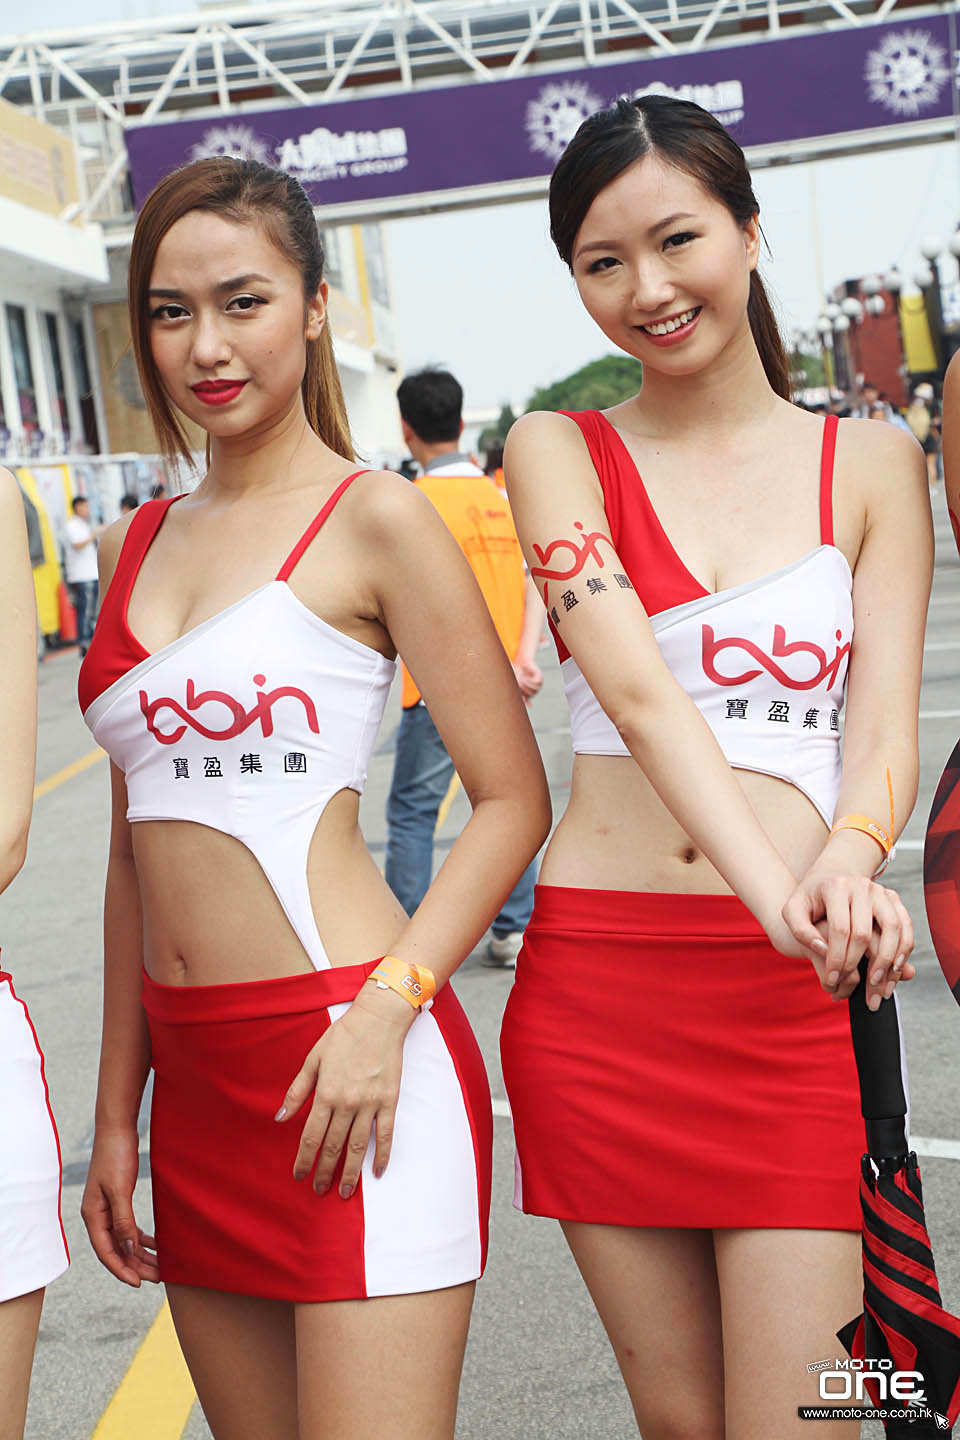 2016 MACAU GP RACING GIRLS